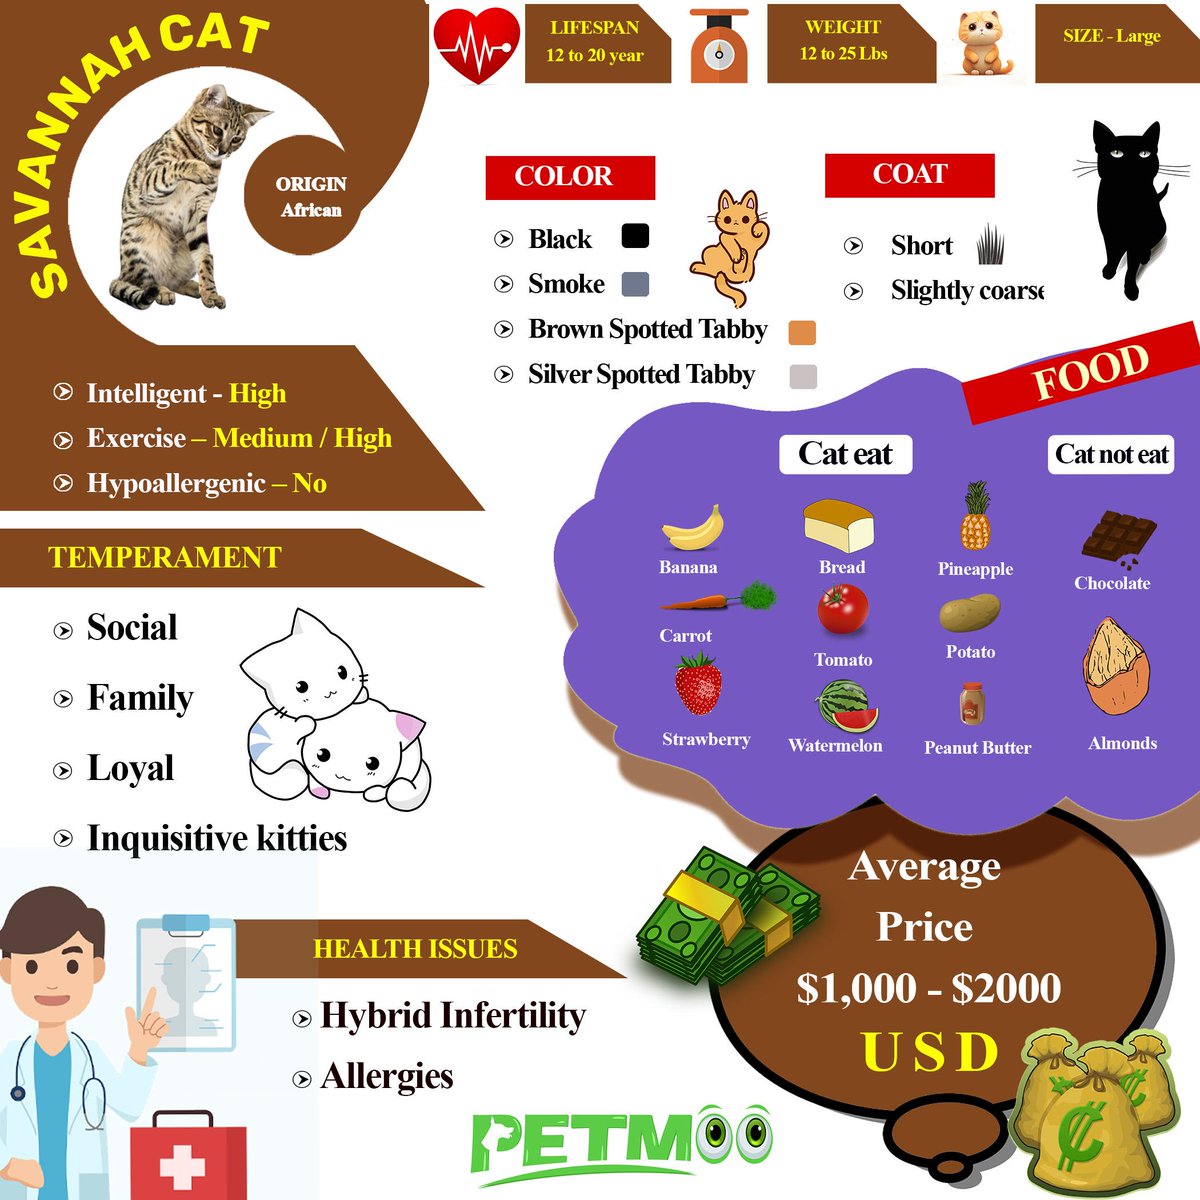 Savannah Cat Infographic
#petmoo #pets #cats #catbreeds #catinfographic #savannahcatinfographic